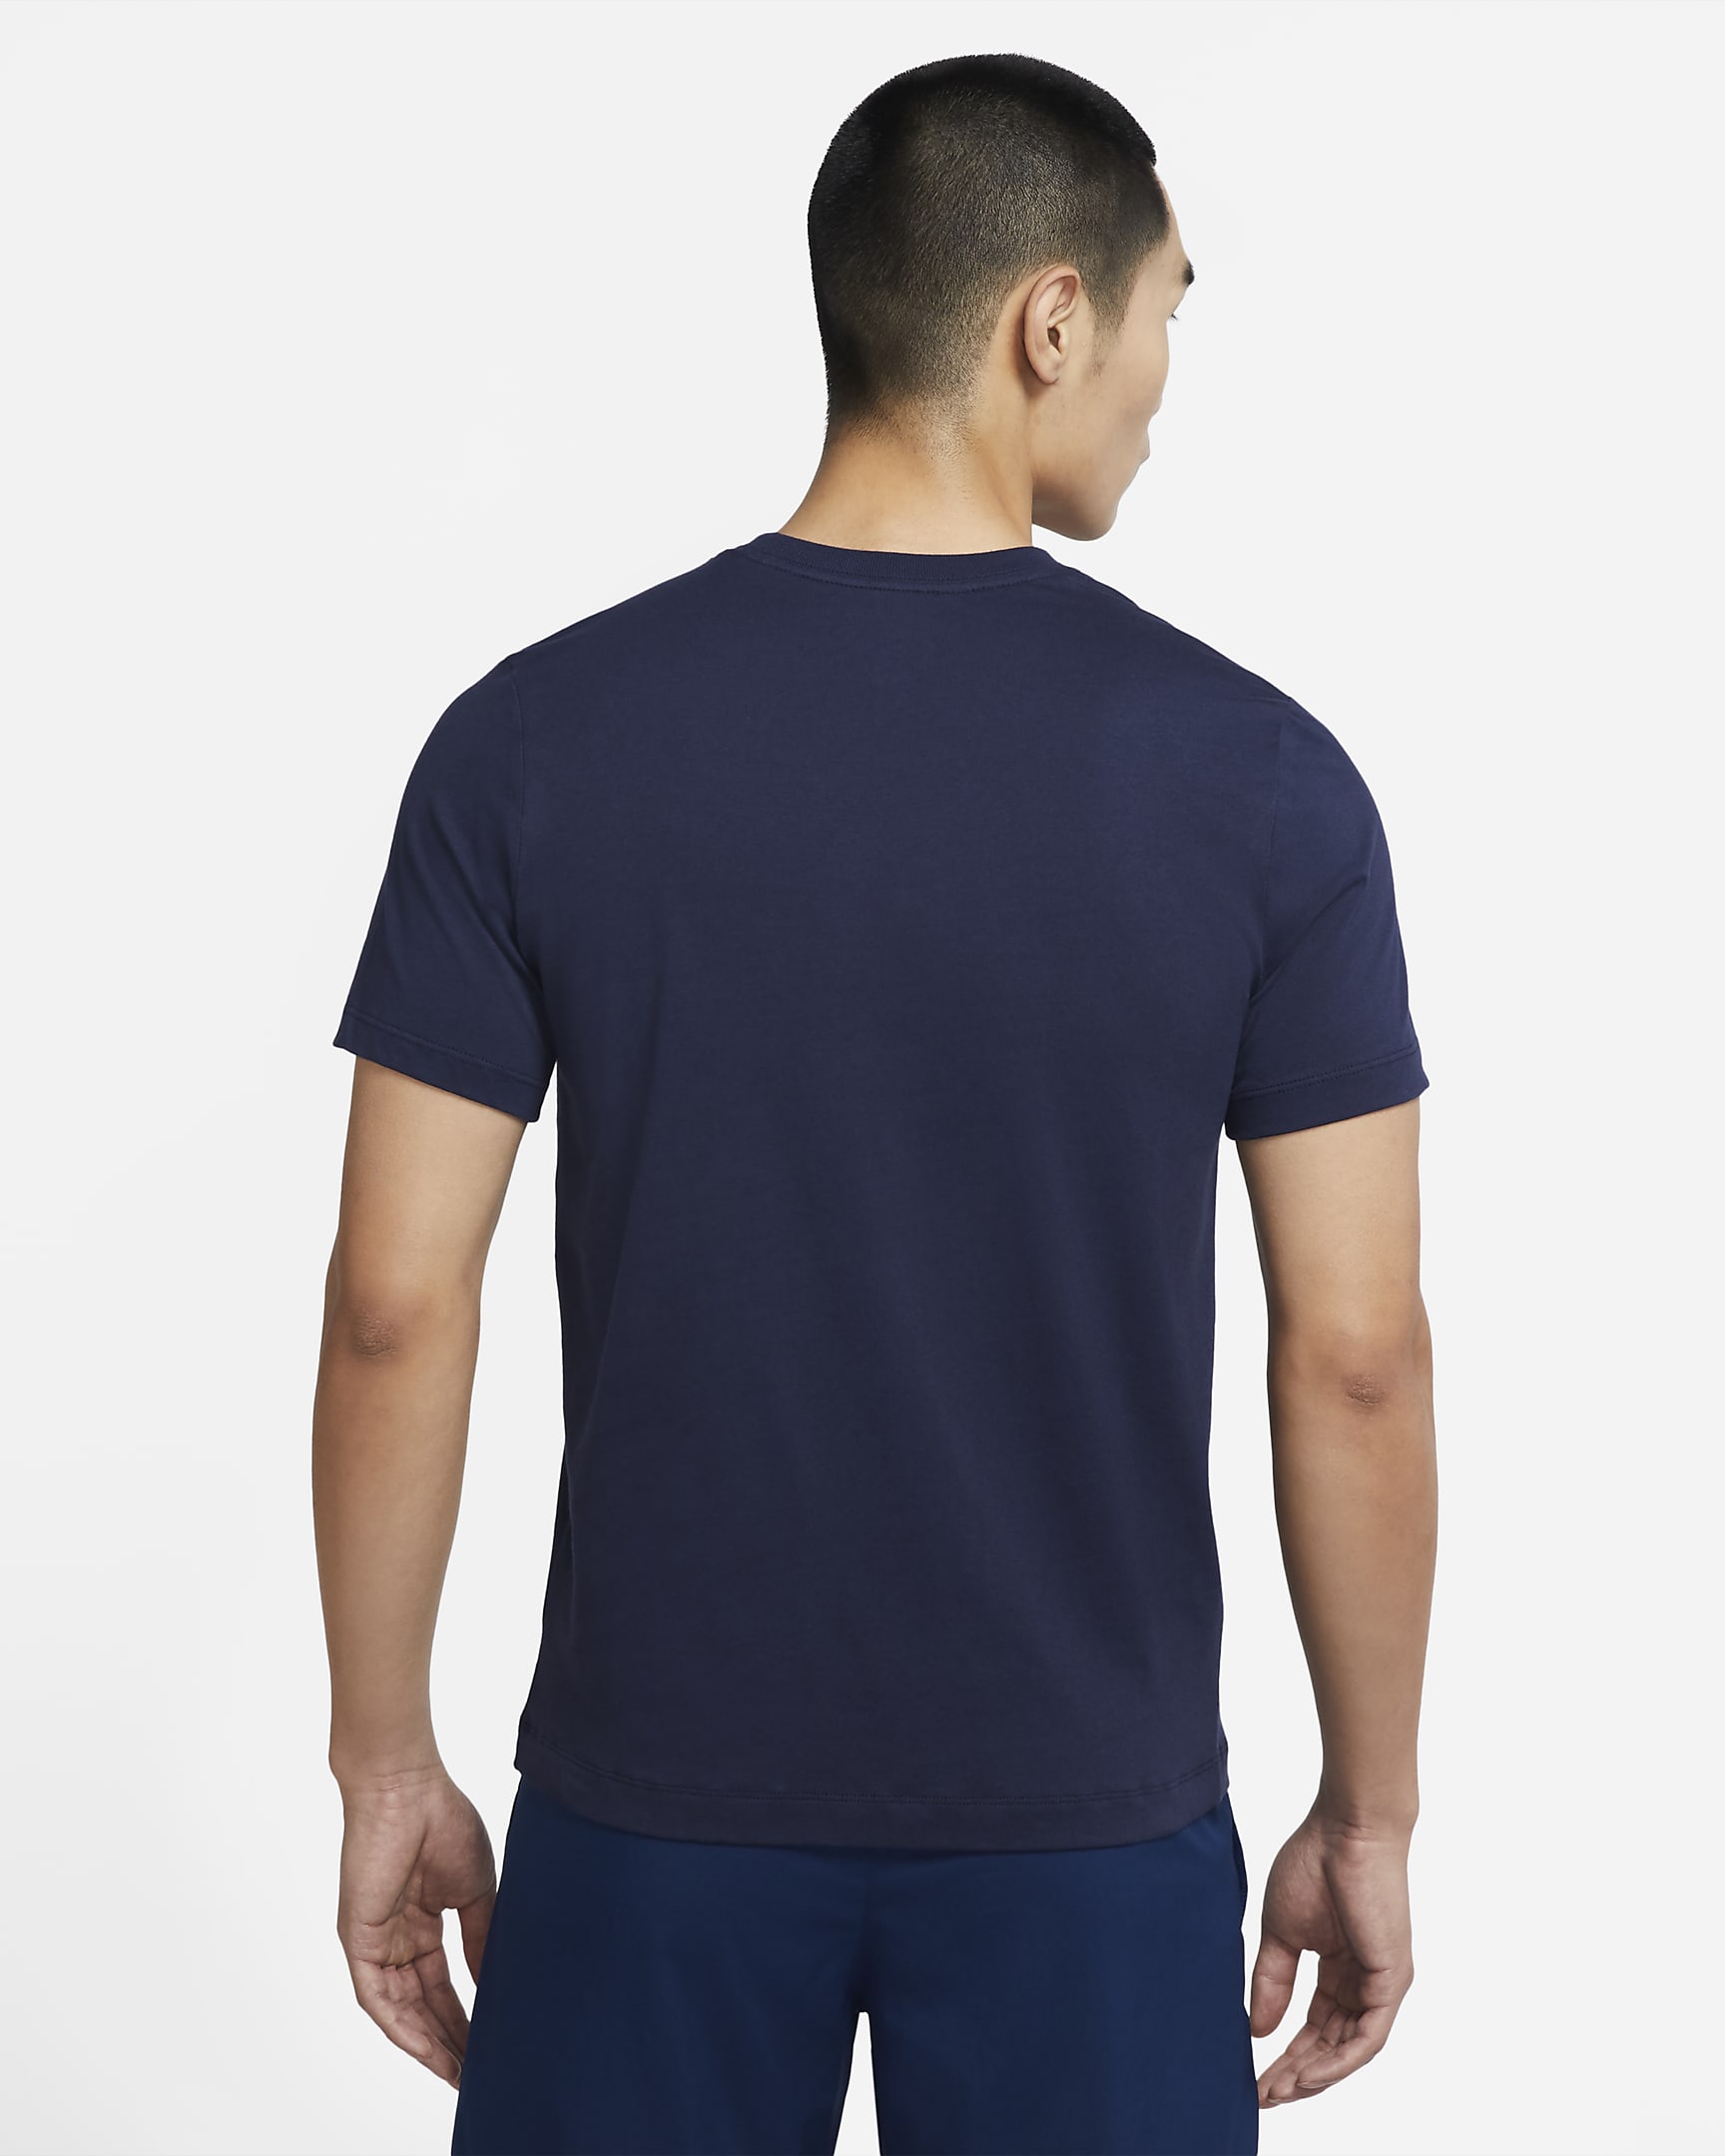 Chelsea FC Men's T-Shirt. Nike IN